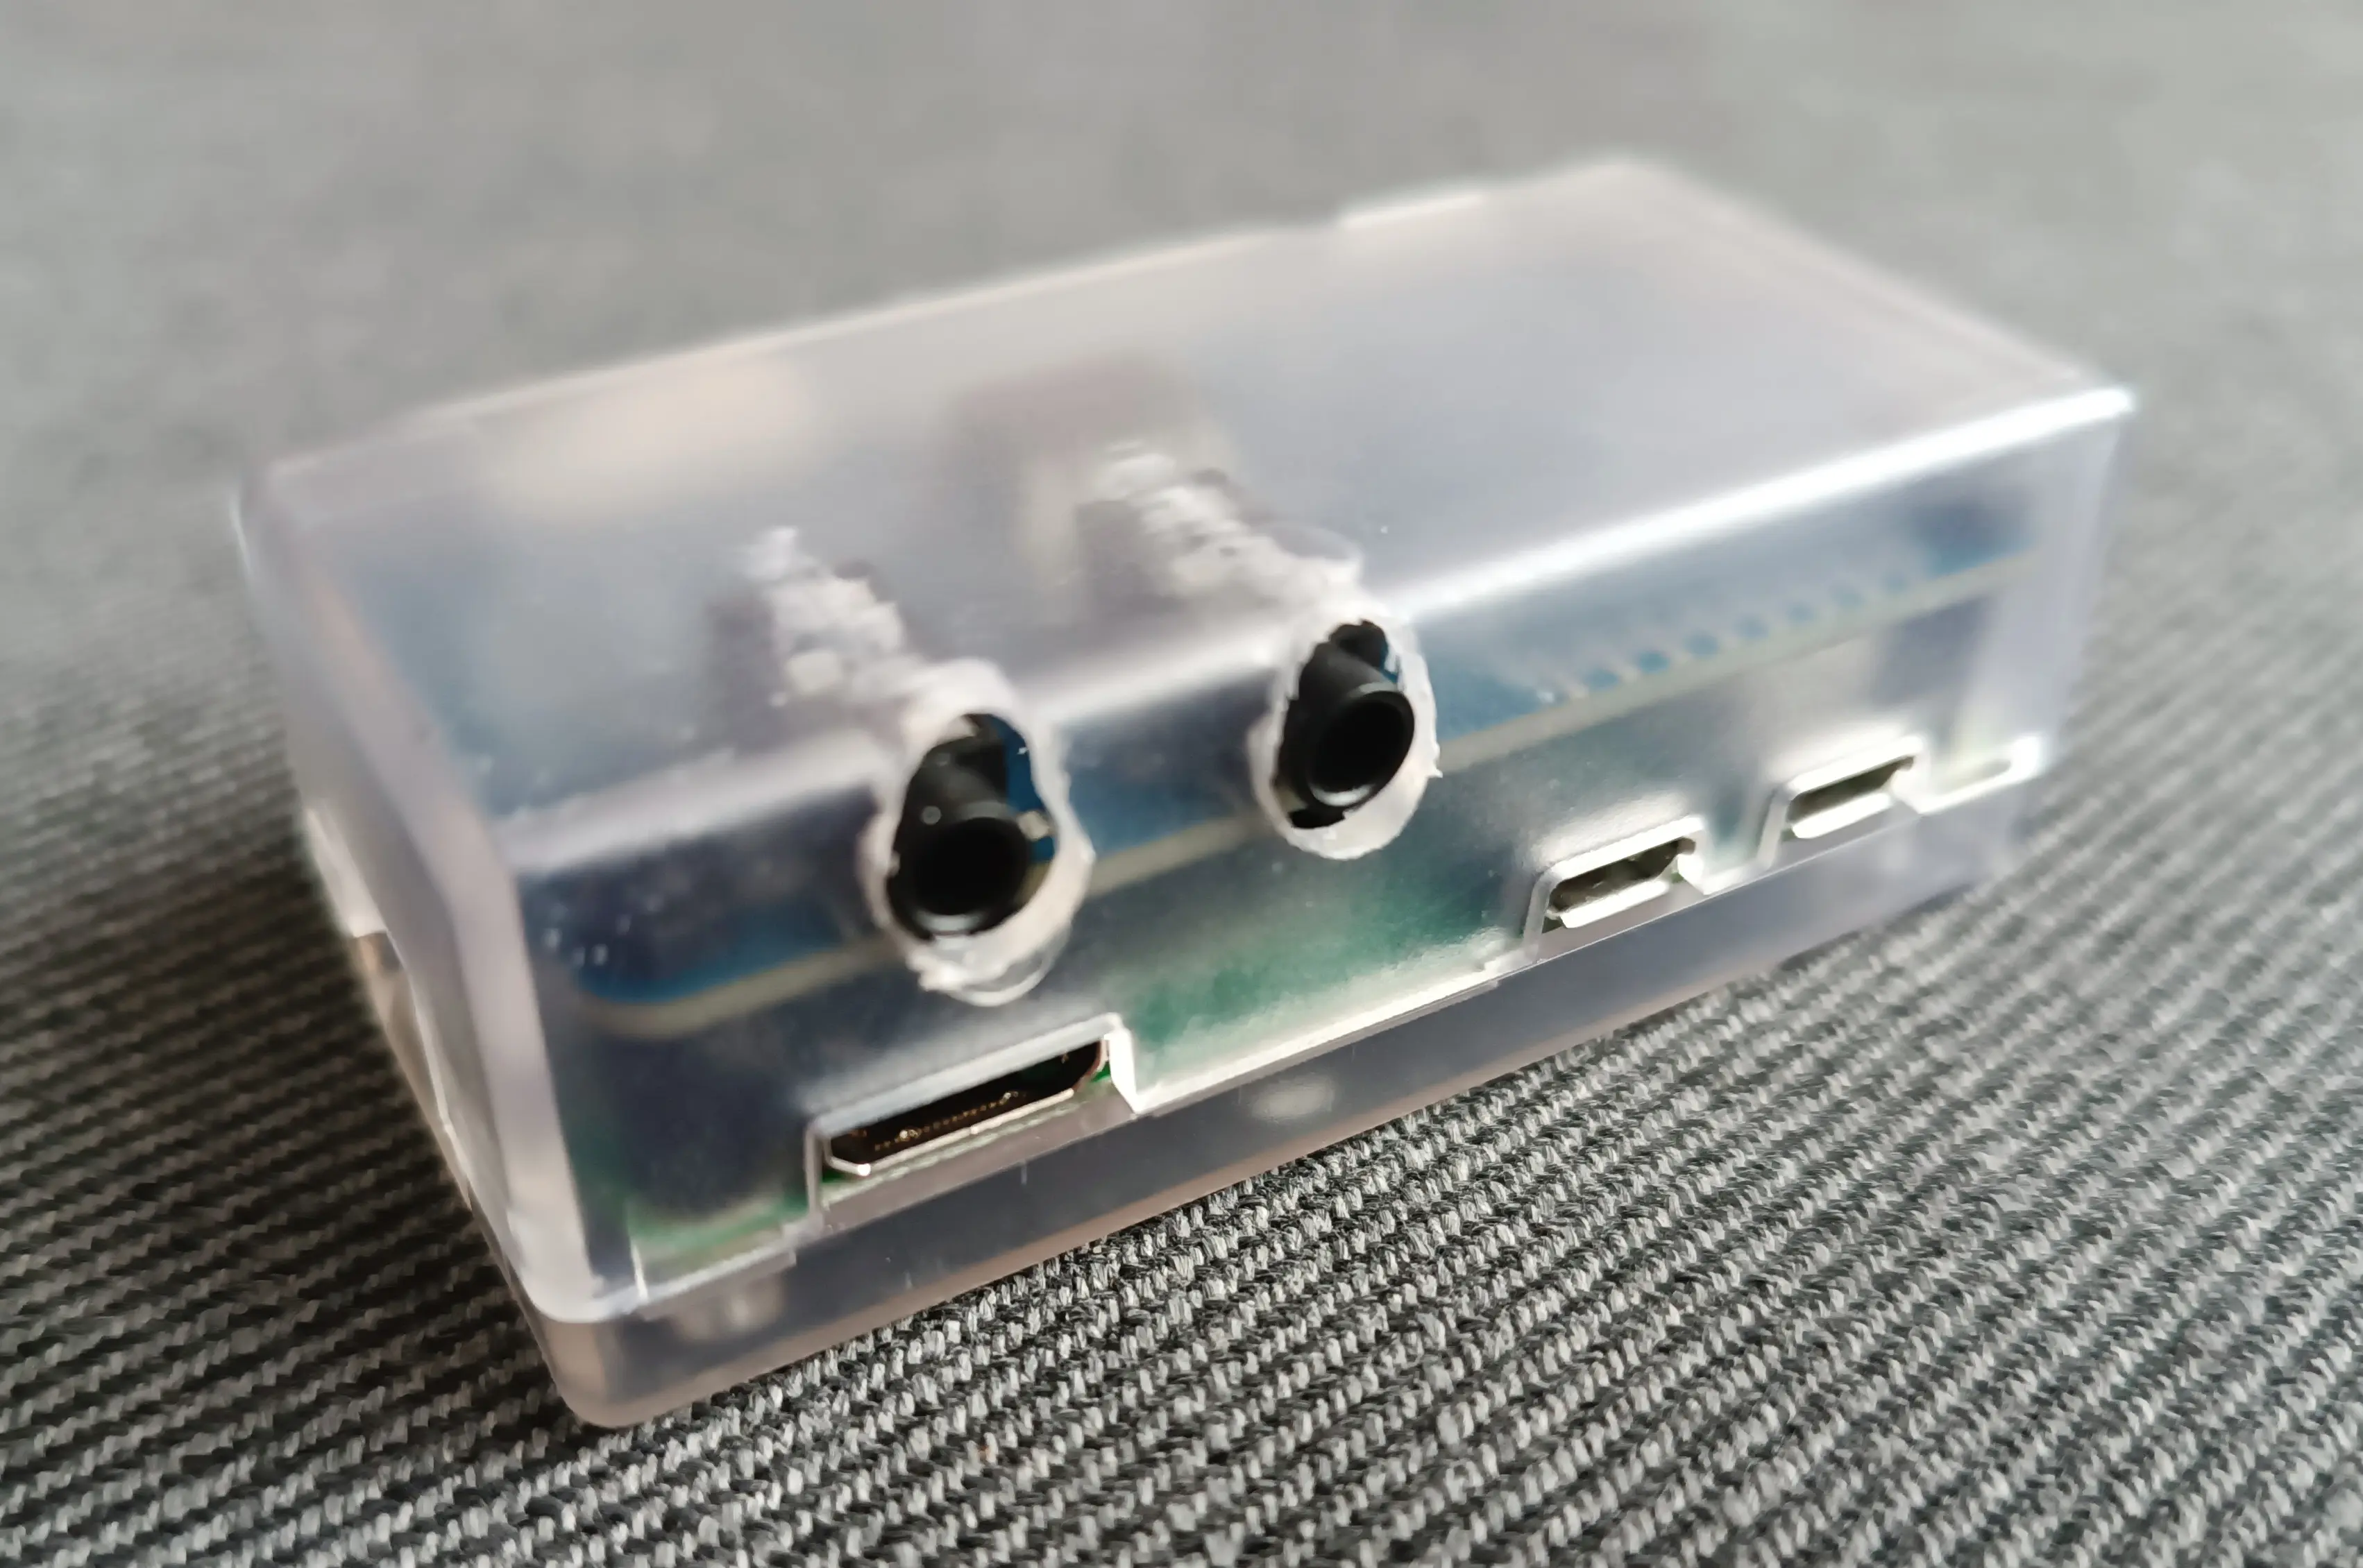 Slim MIDI and Raspberry PI zero in transparent case